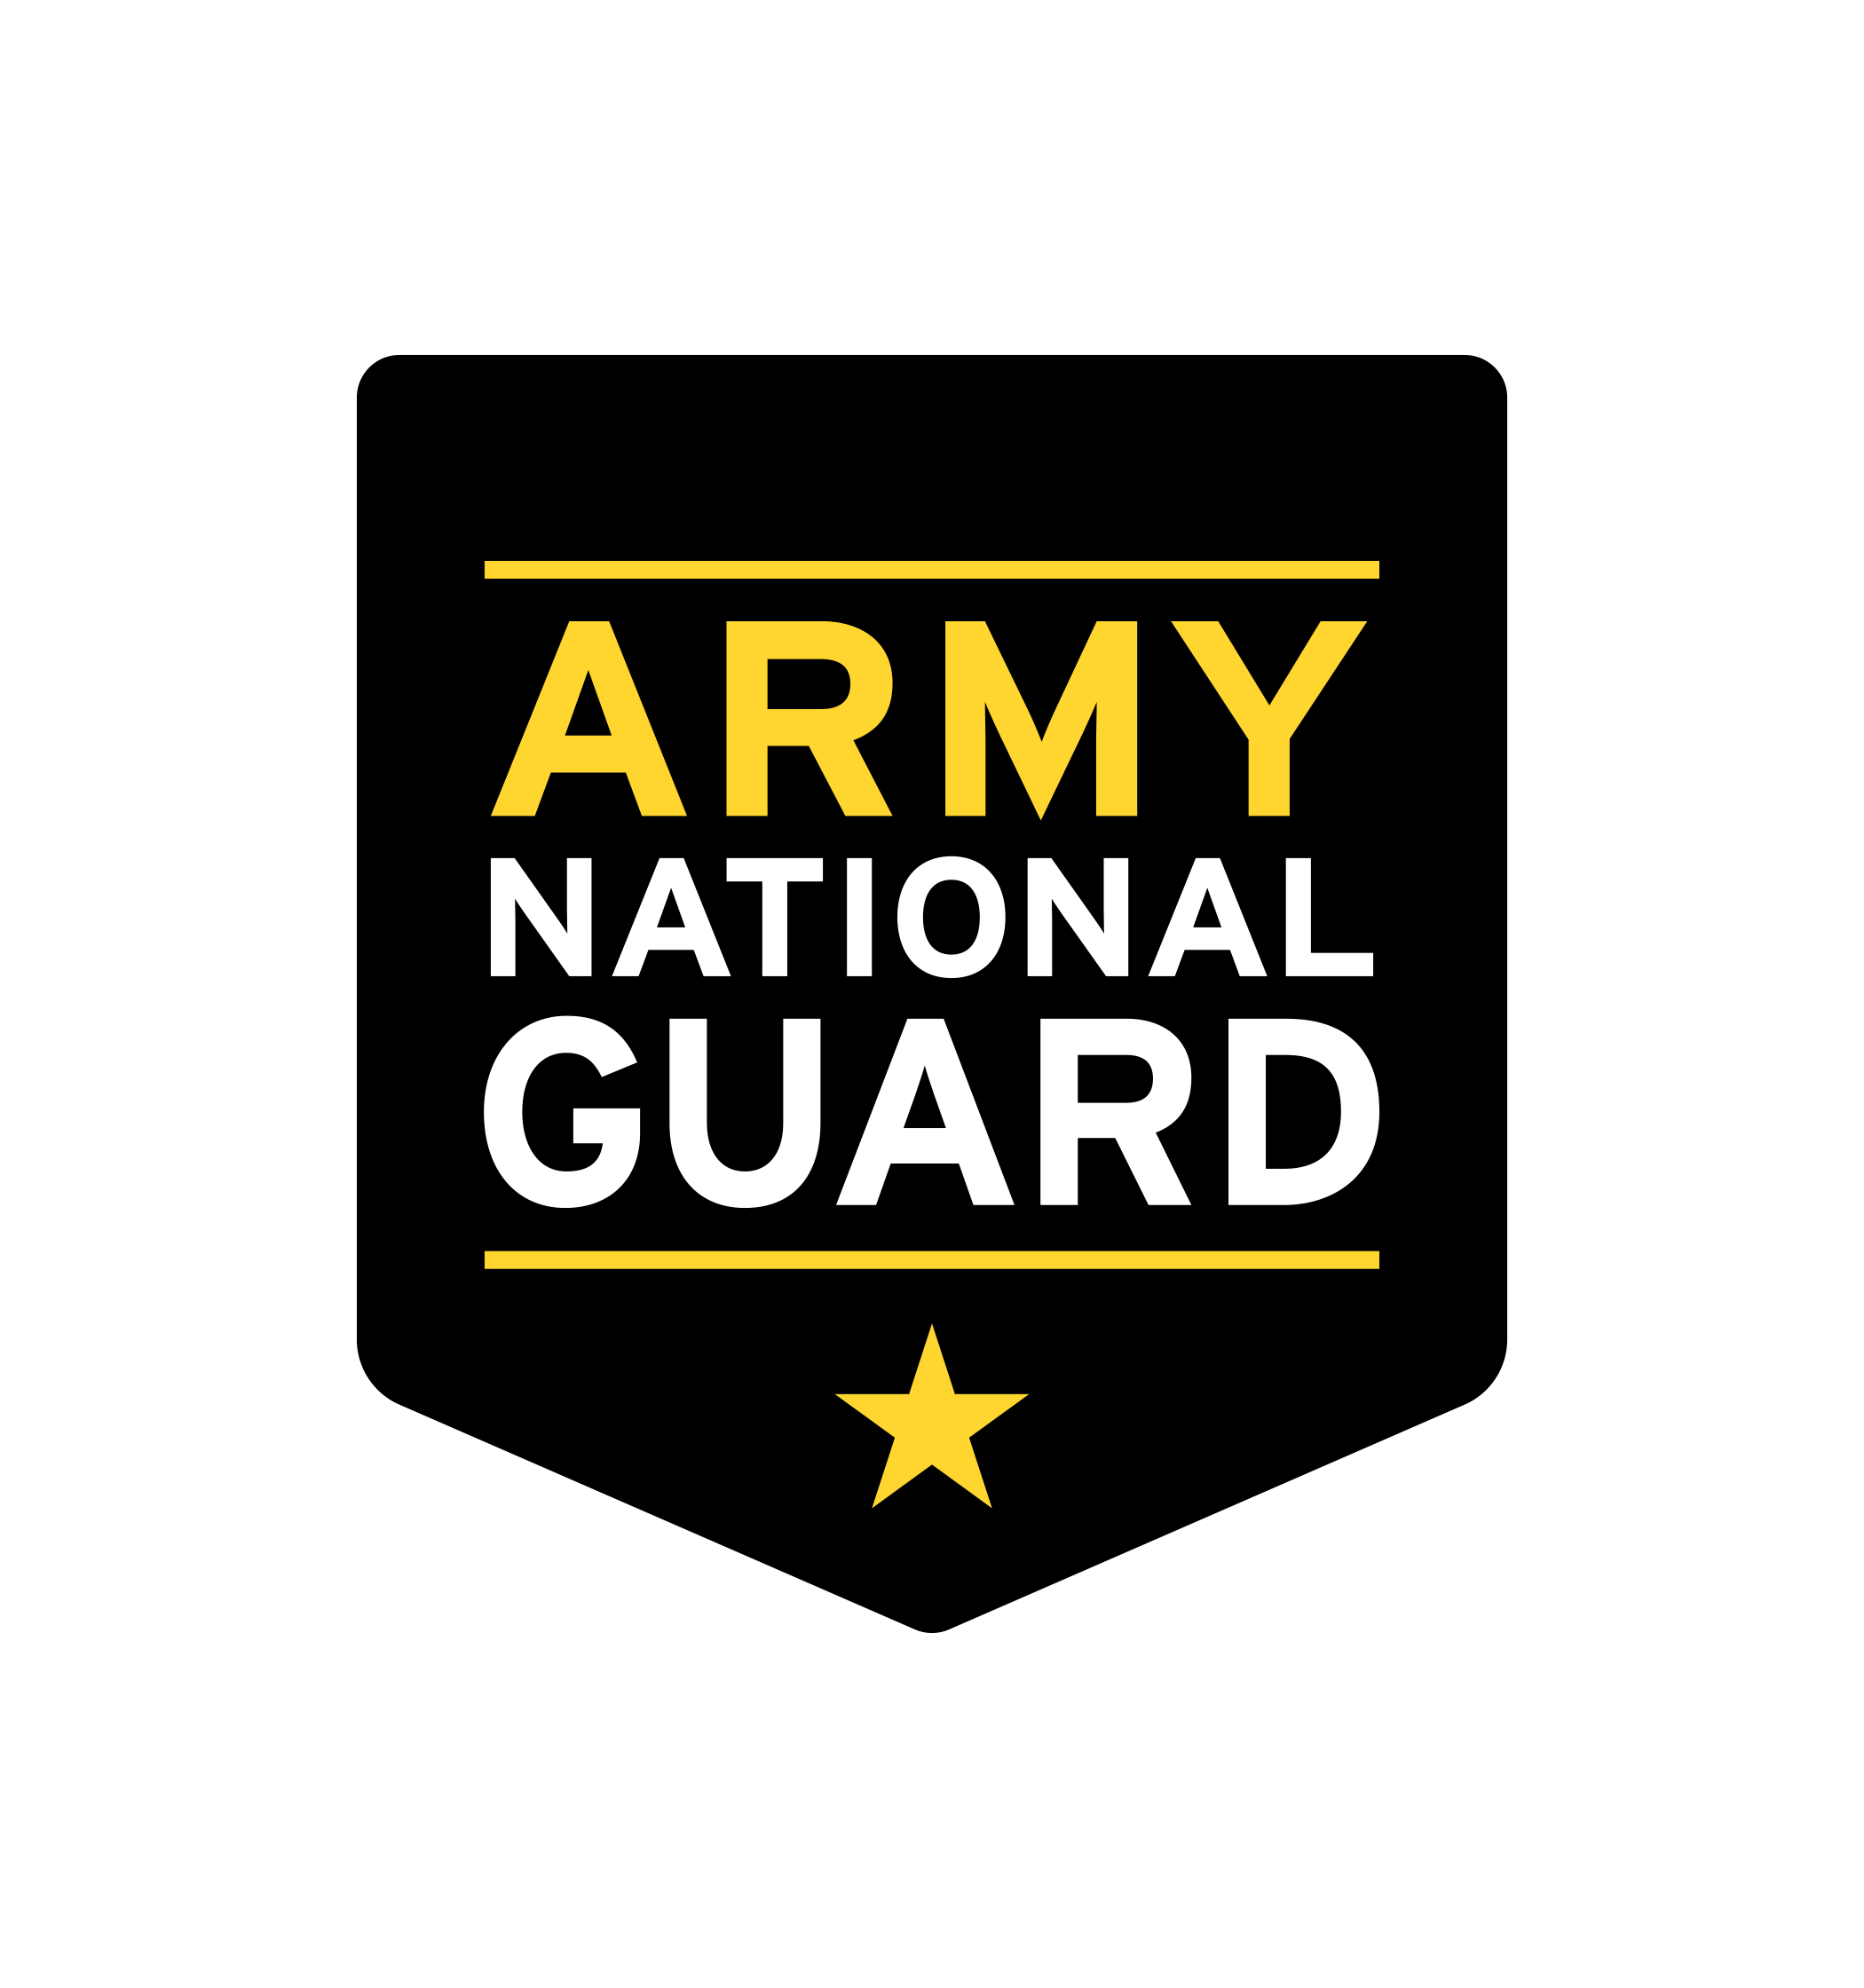 National Logo - army national guard logo png. Clipart & Vectors